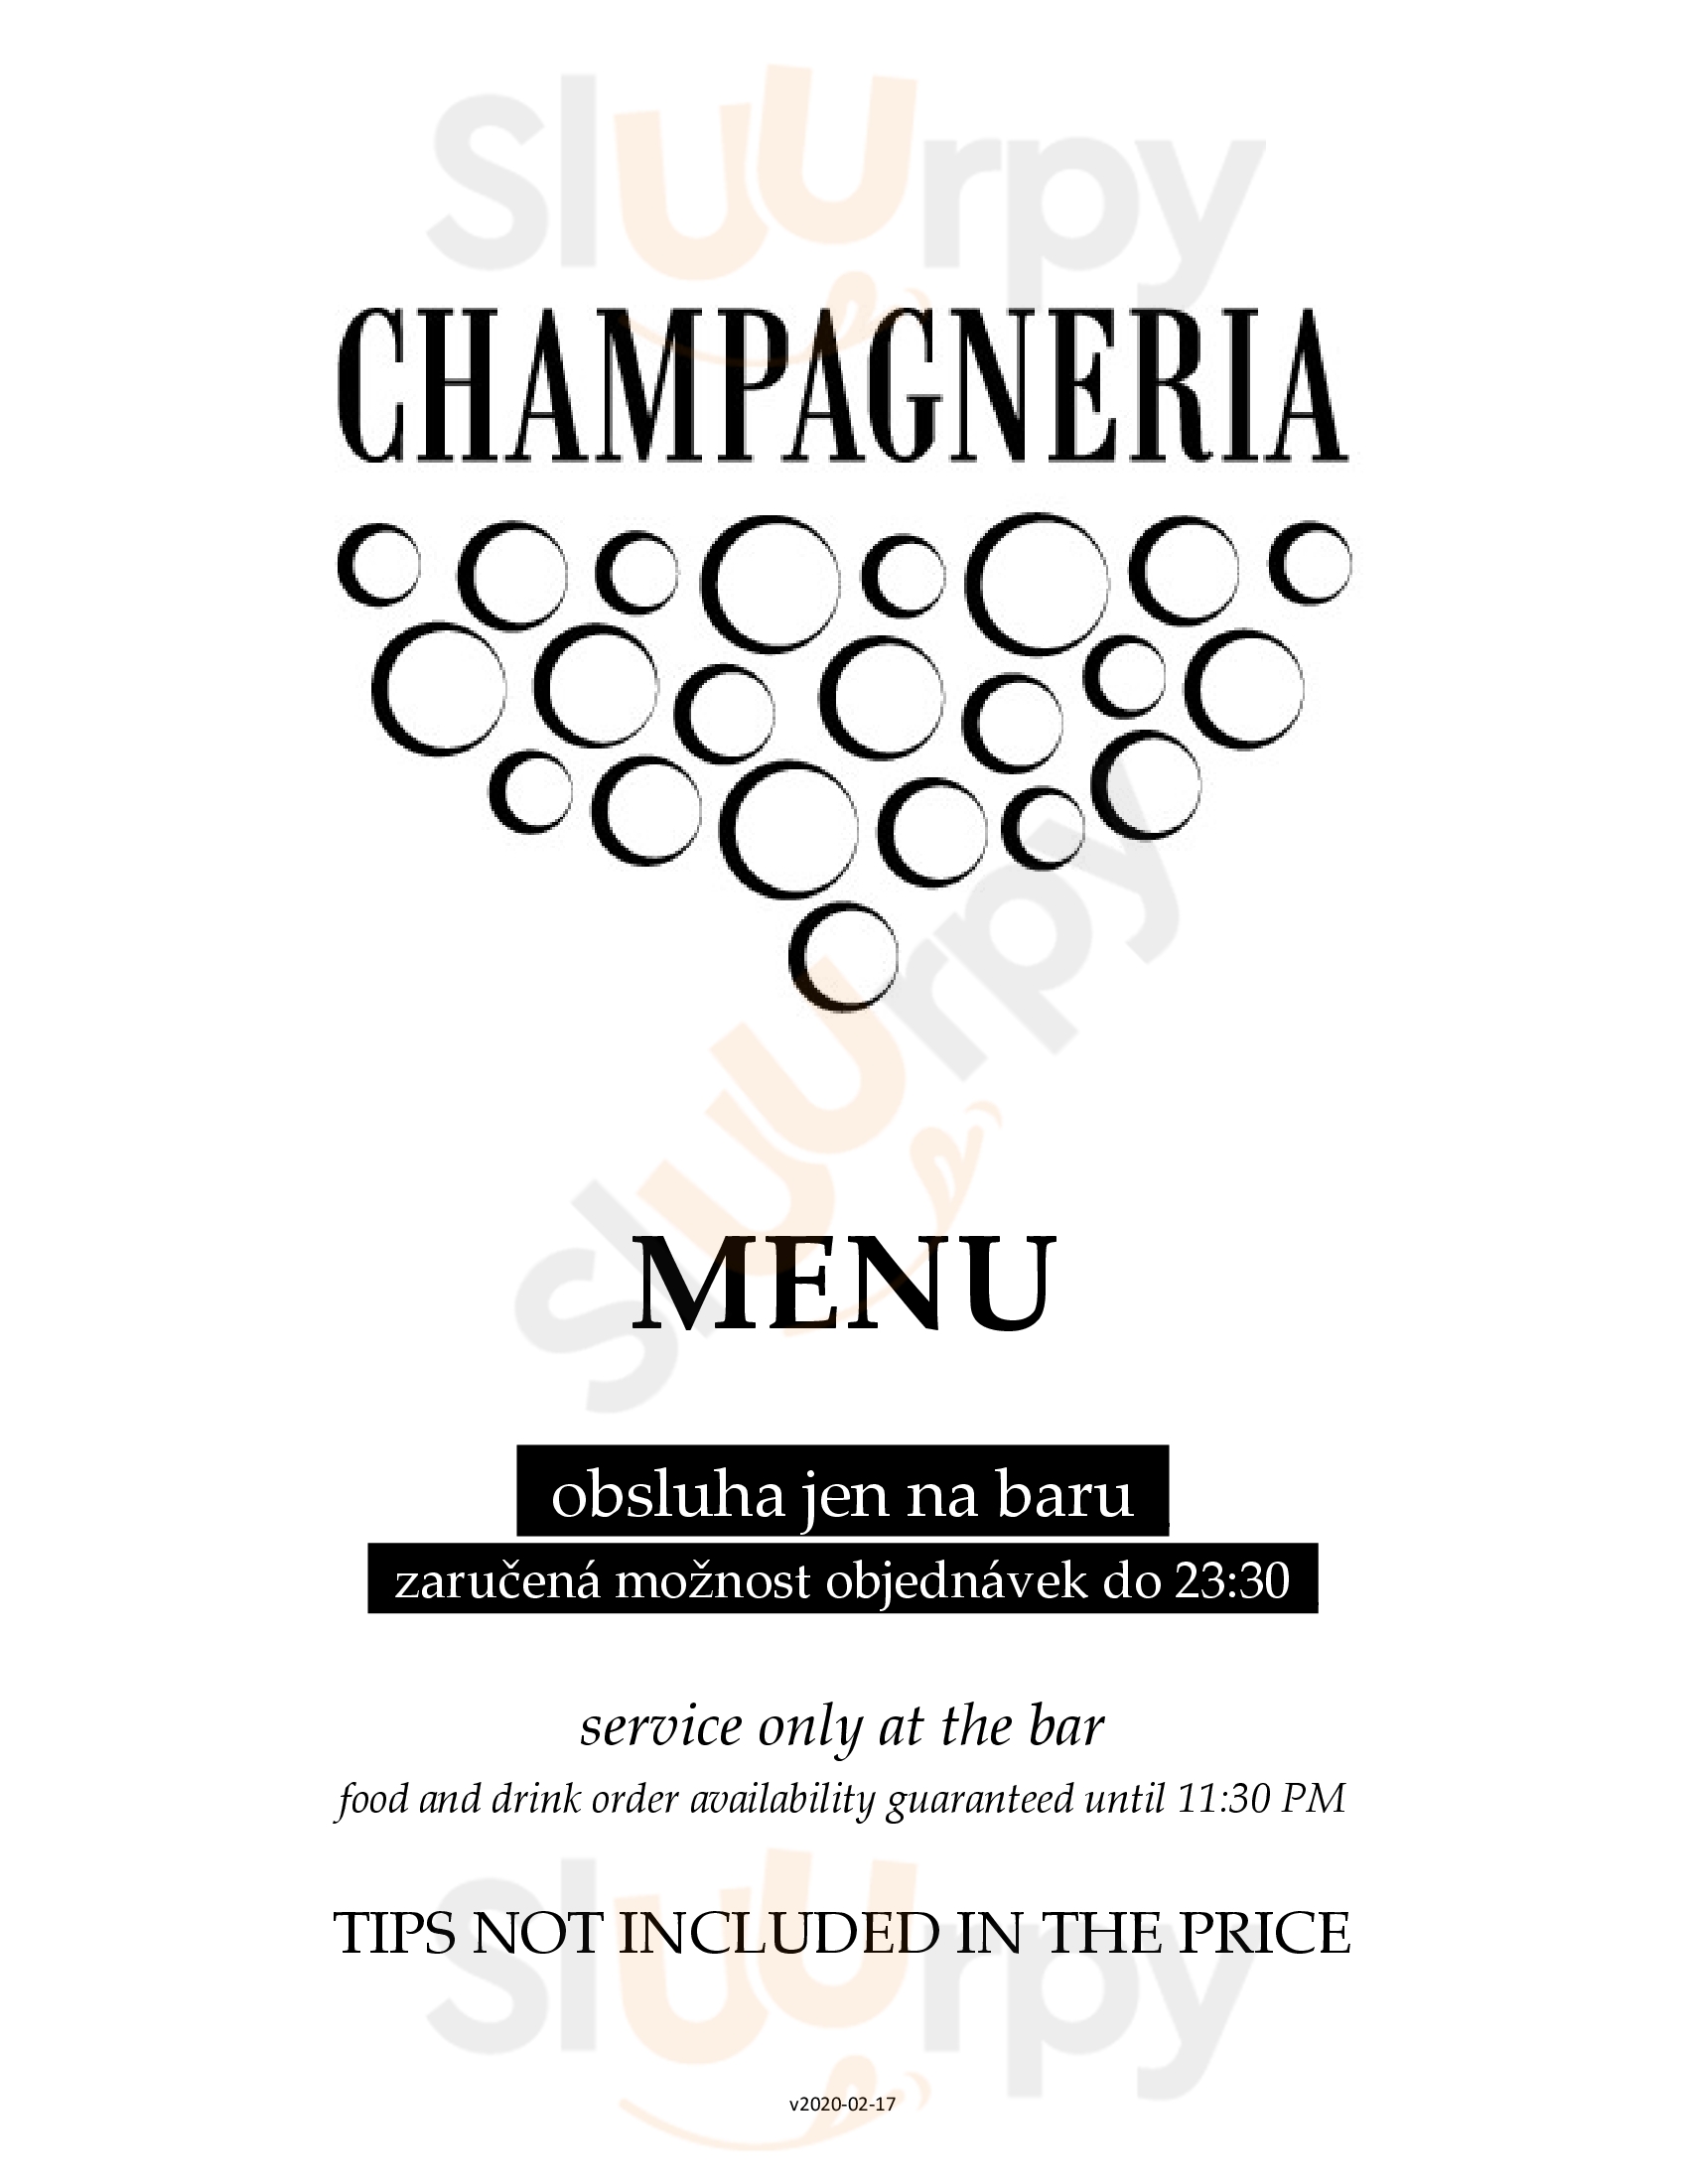 Champagneria Praha Menu - 1